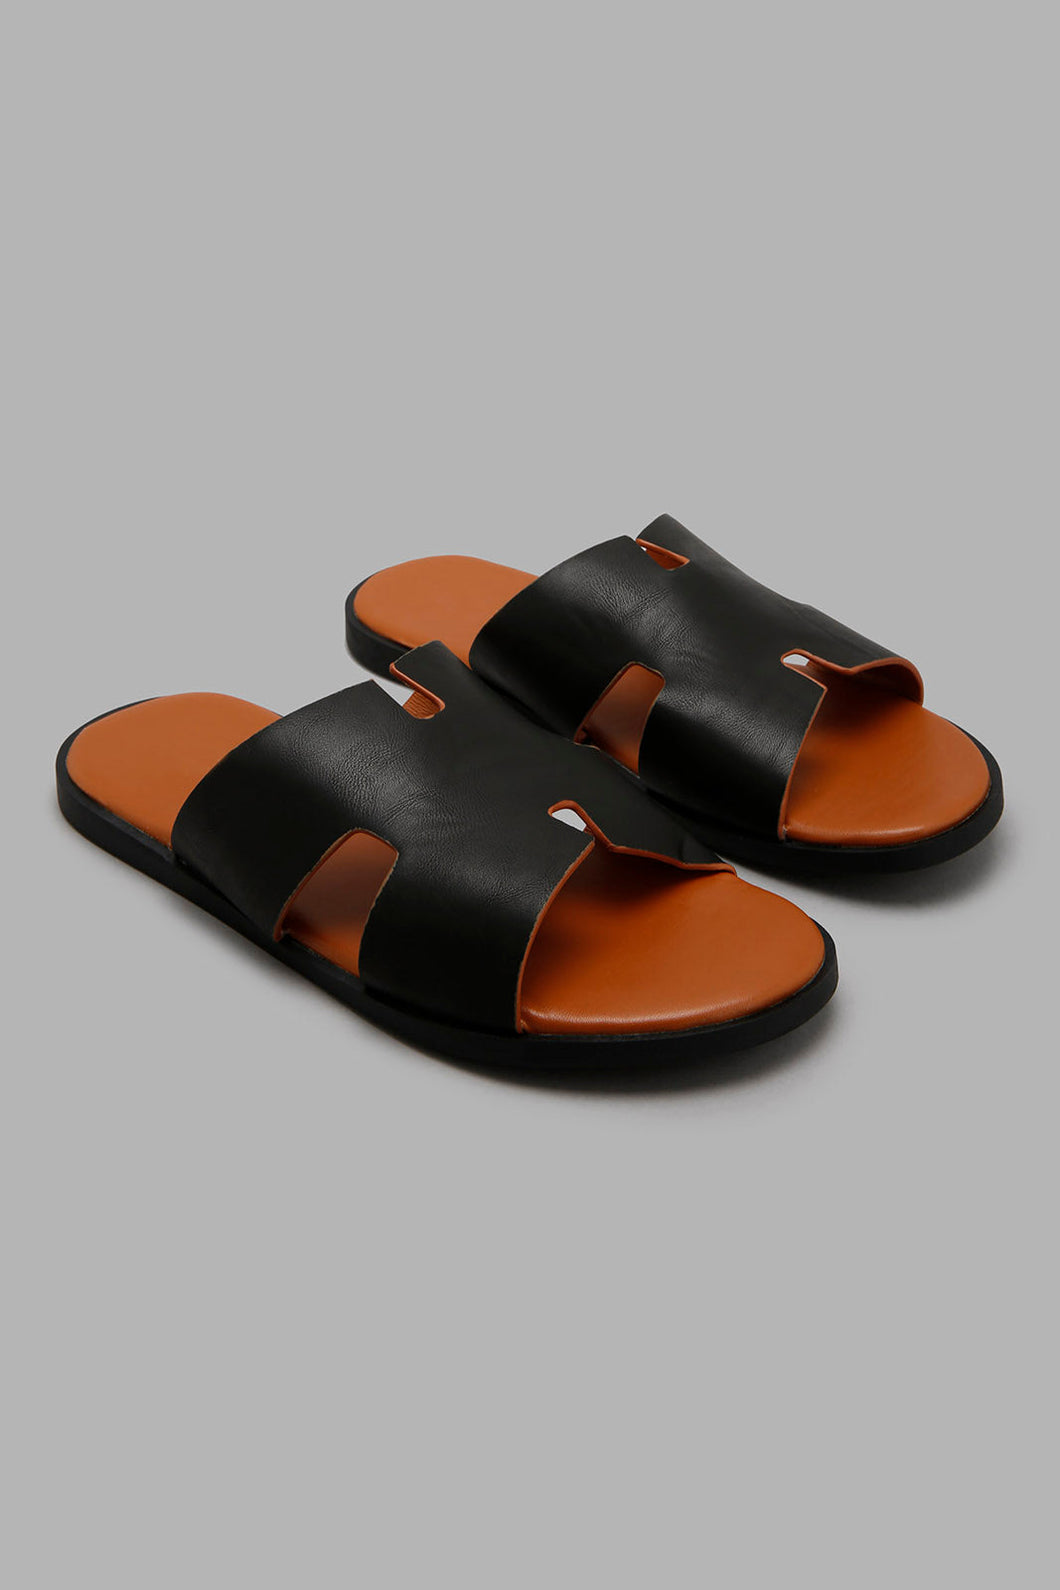 Black H Strap Slide Sandal صندل عربي باللون الأسود